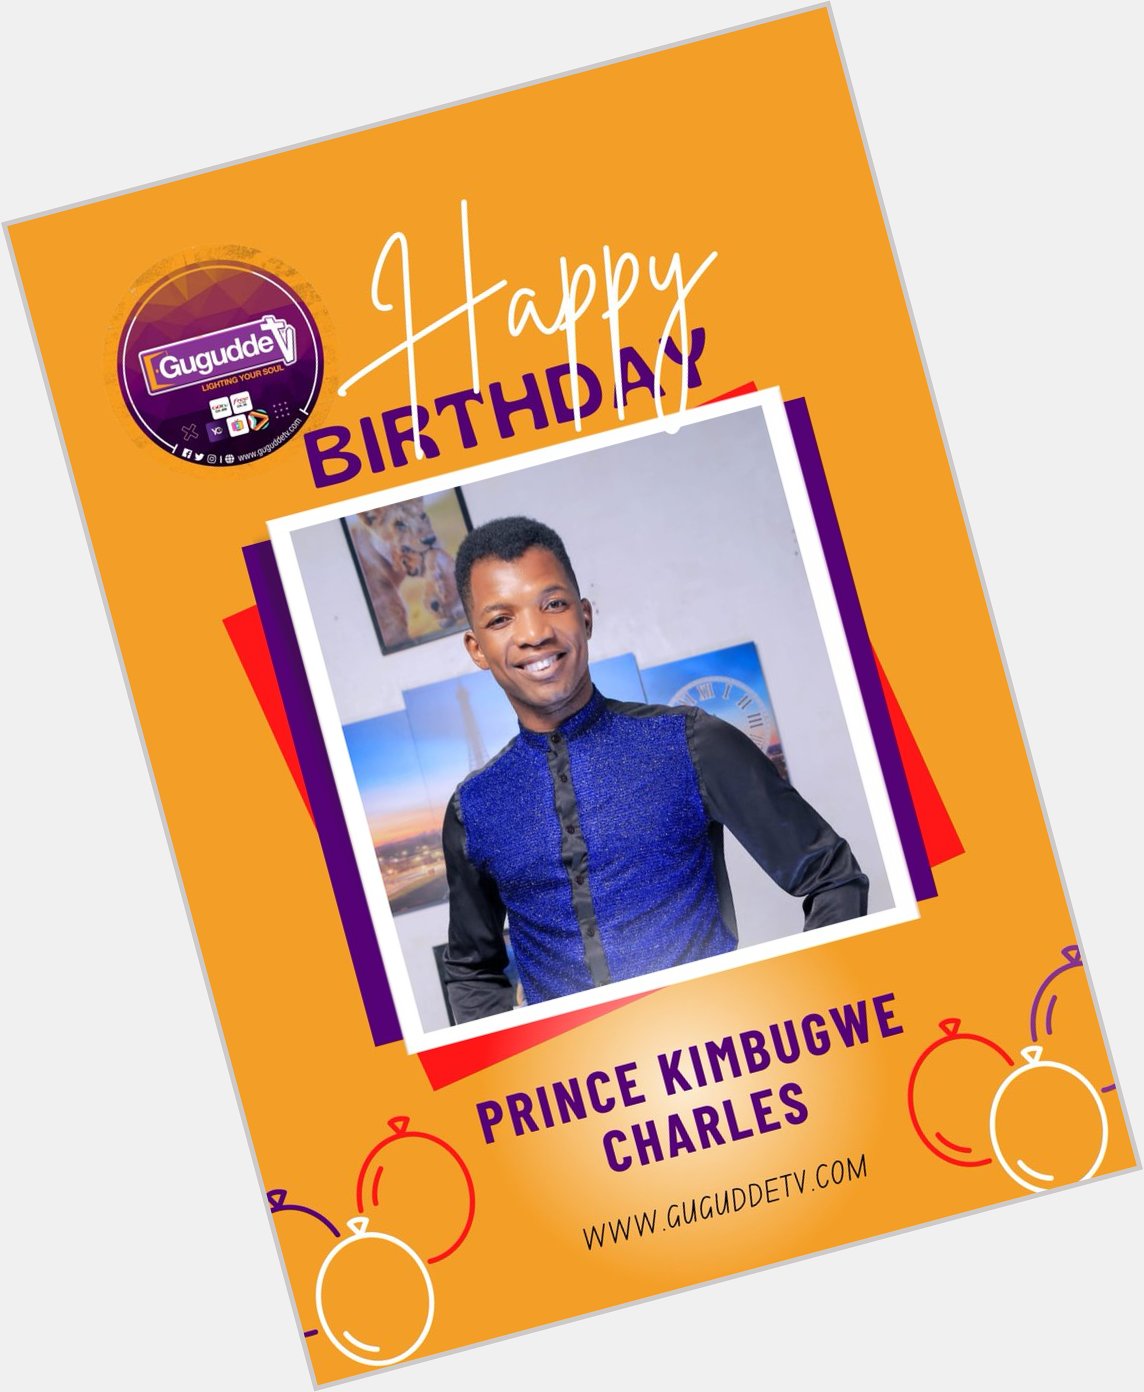 Today we celebrate Prince Charles Kimbugwe. Happy birthday! 